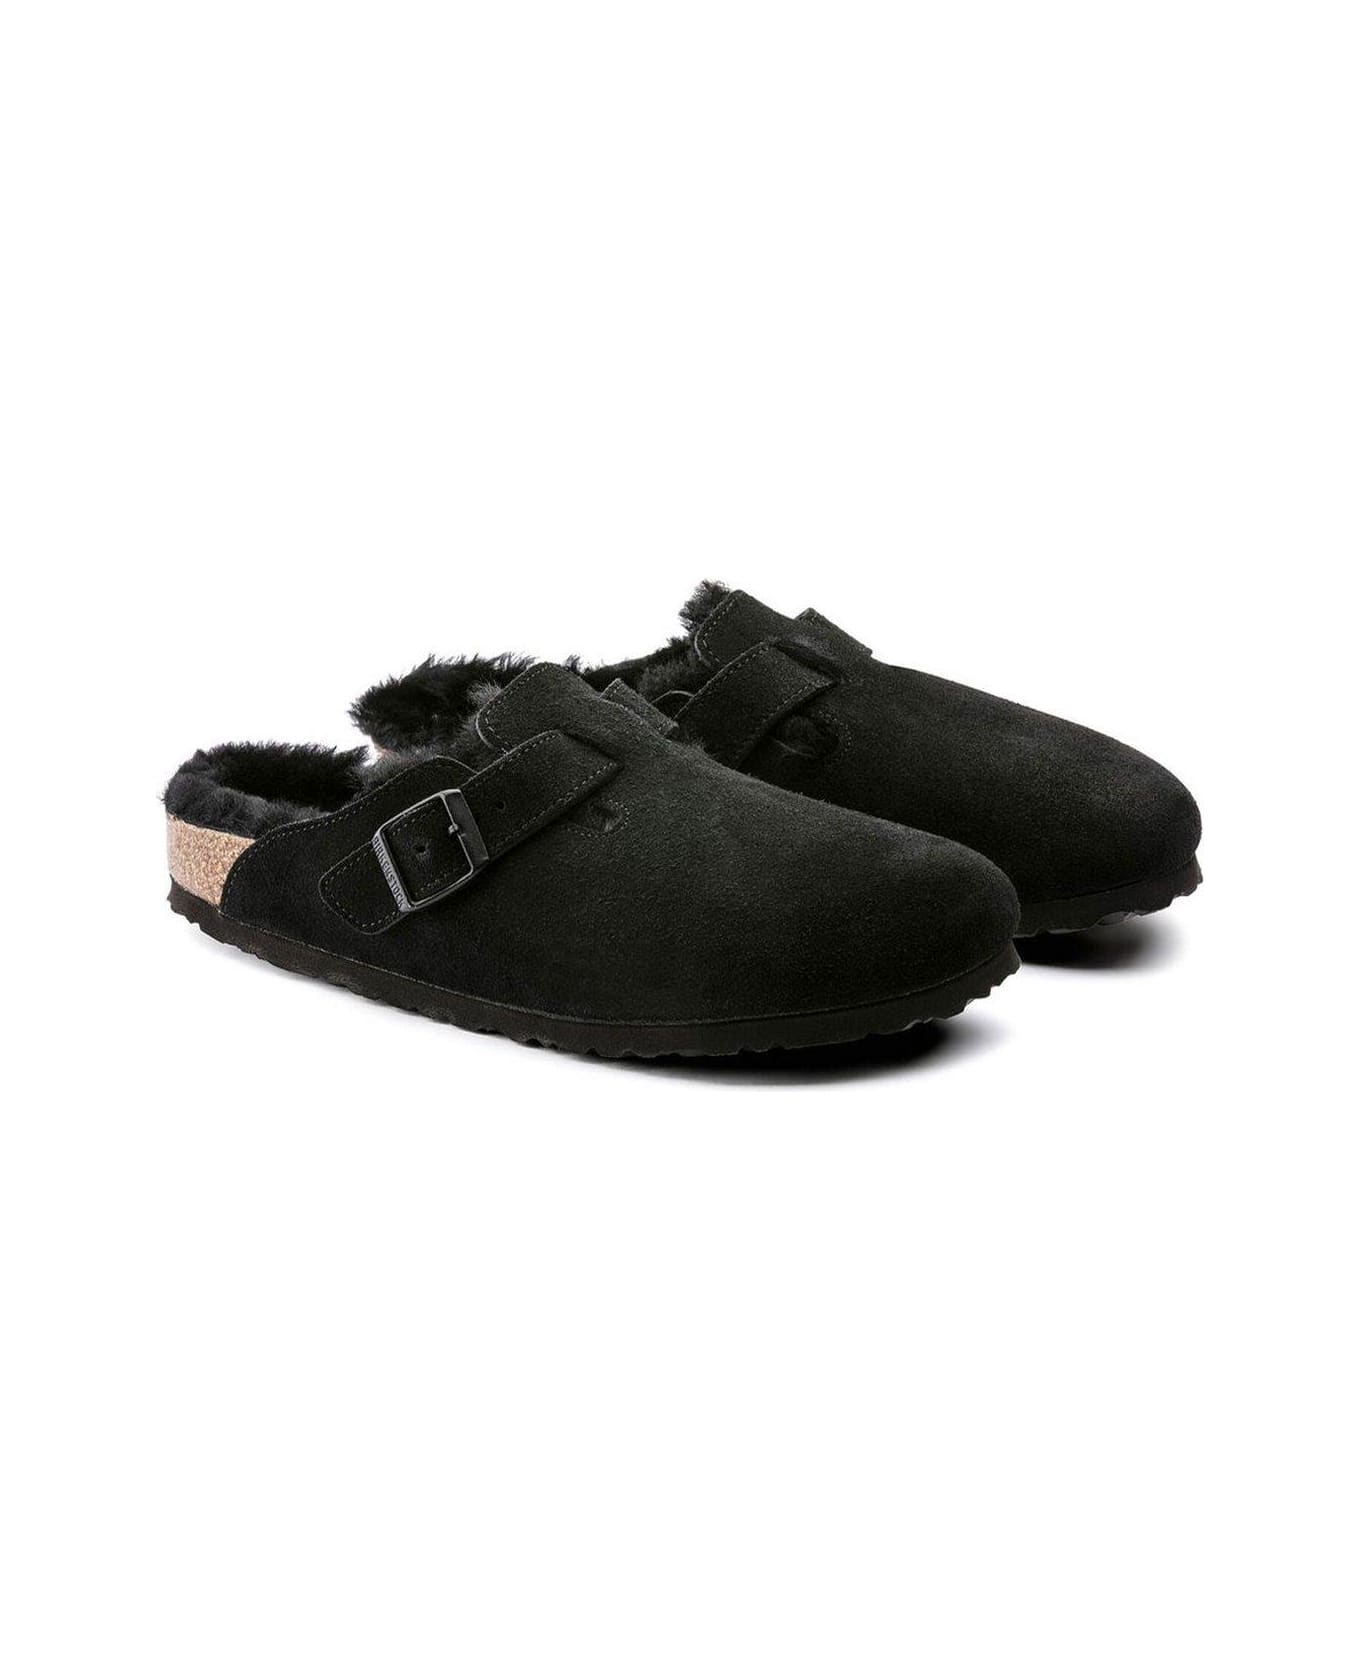 Birkenstock Boston Slip-on Sandals - Black Black